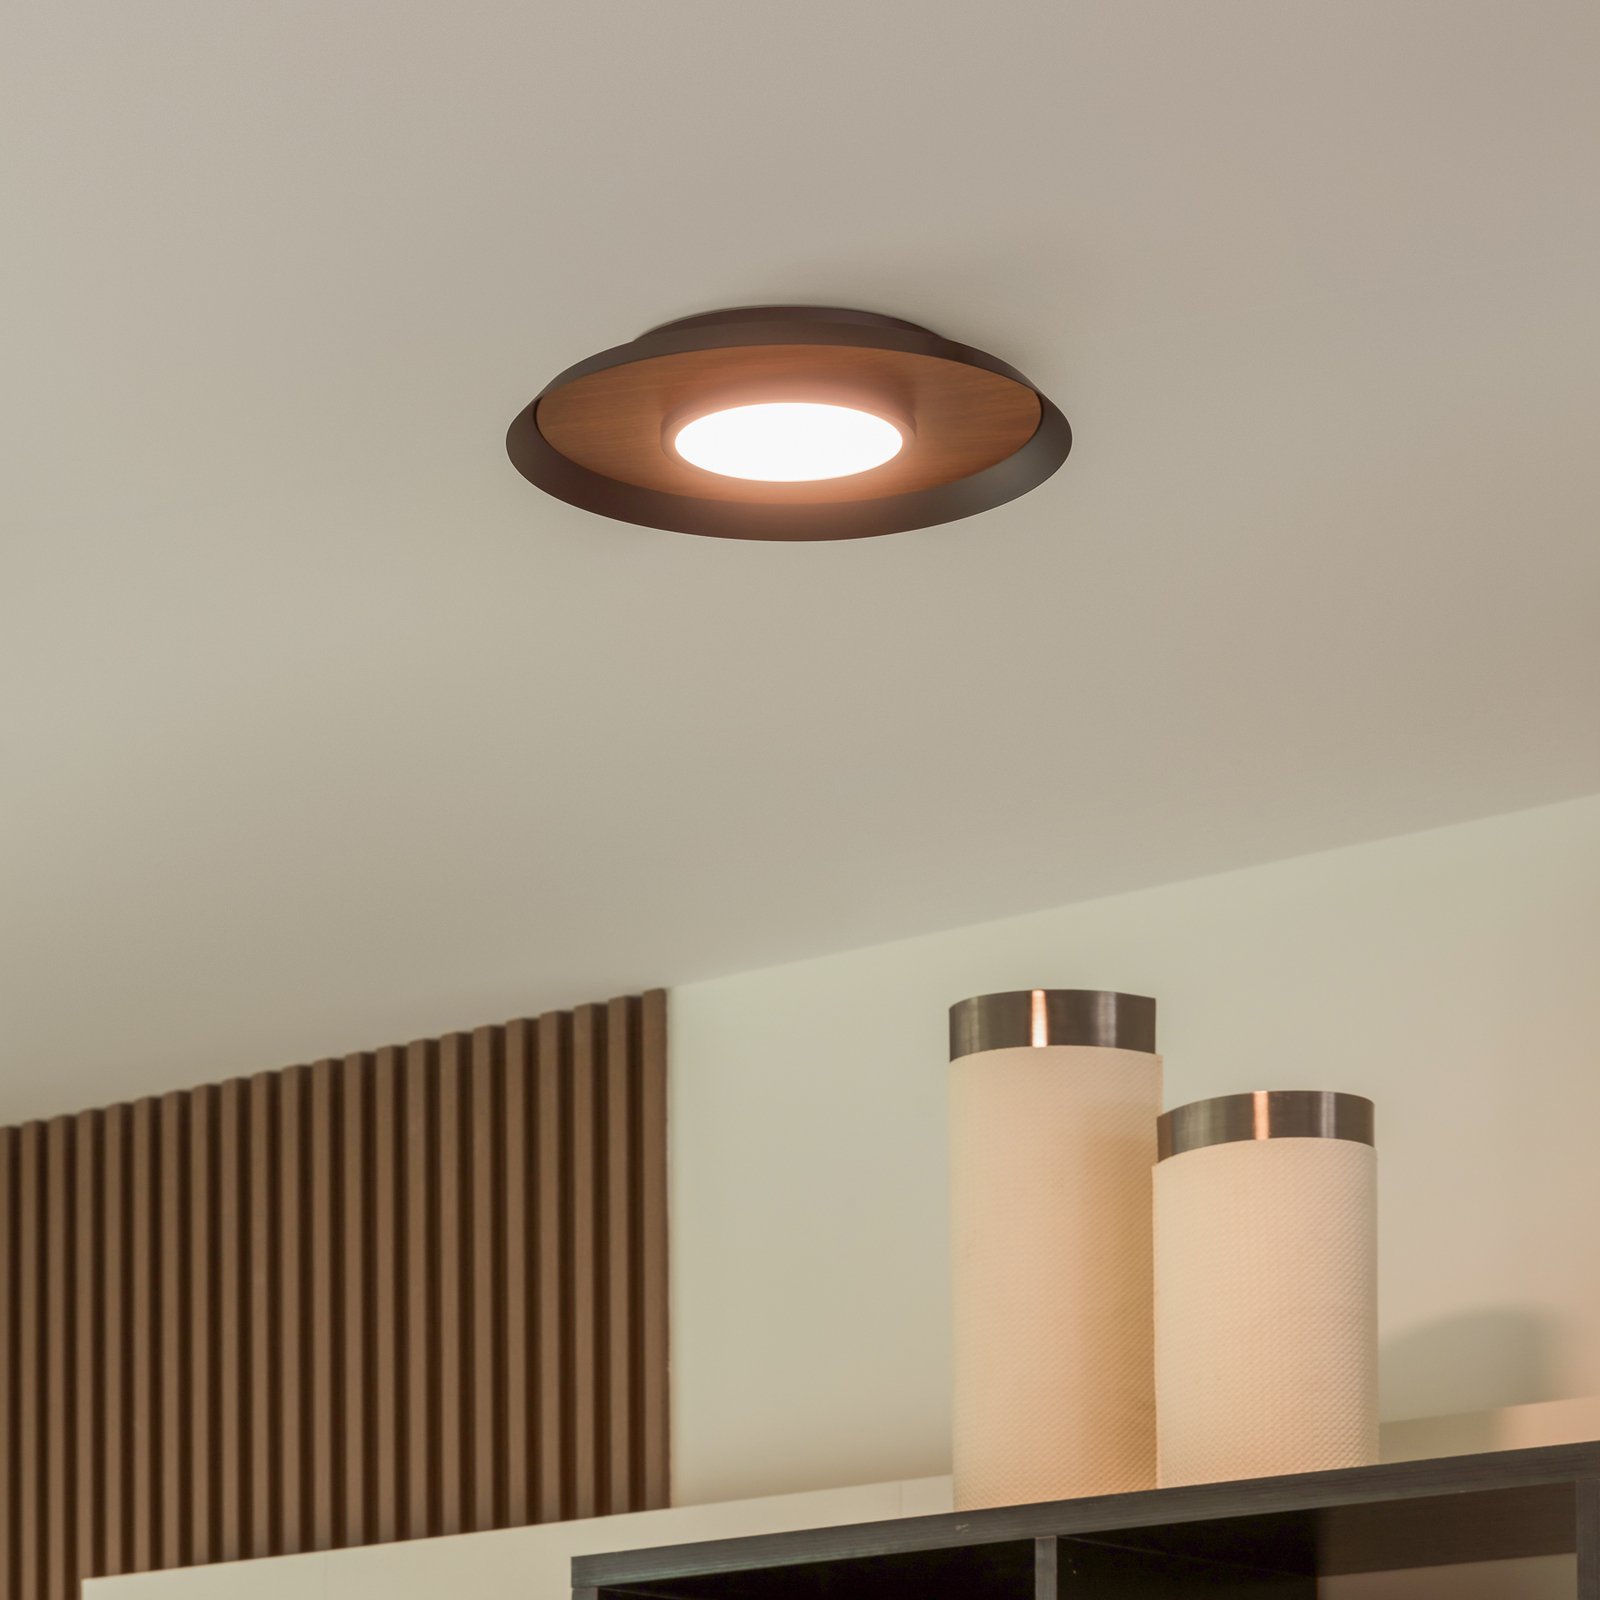 Lucande Merilla ceiling light, veneer wood